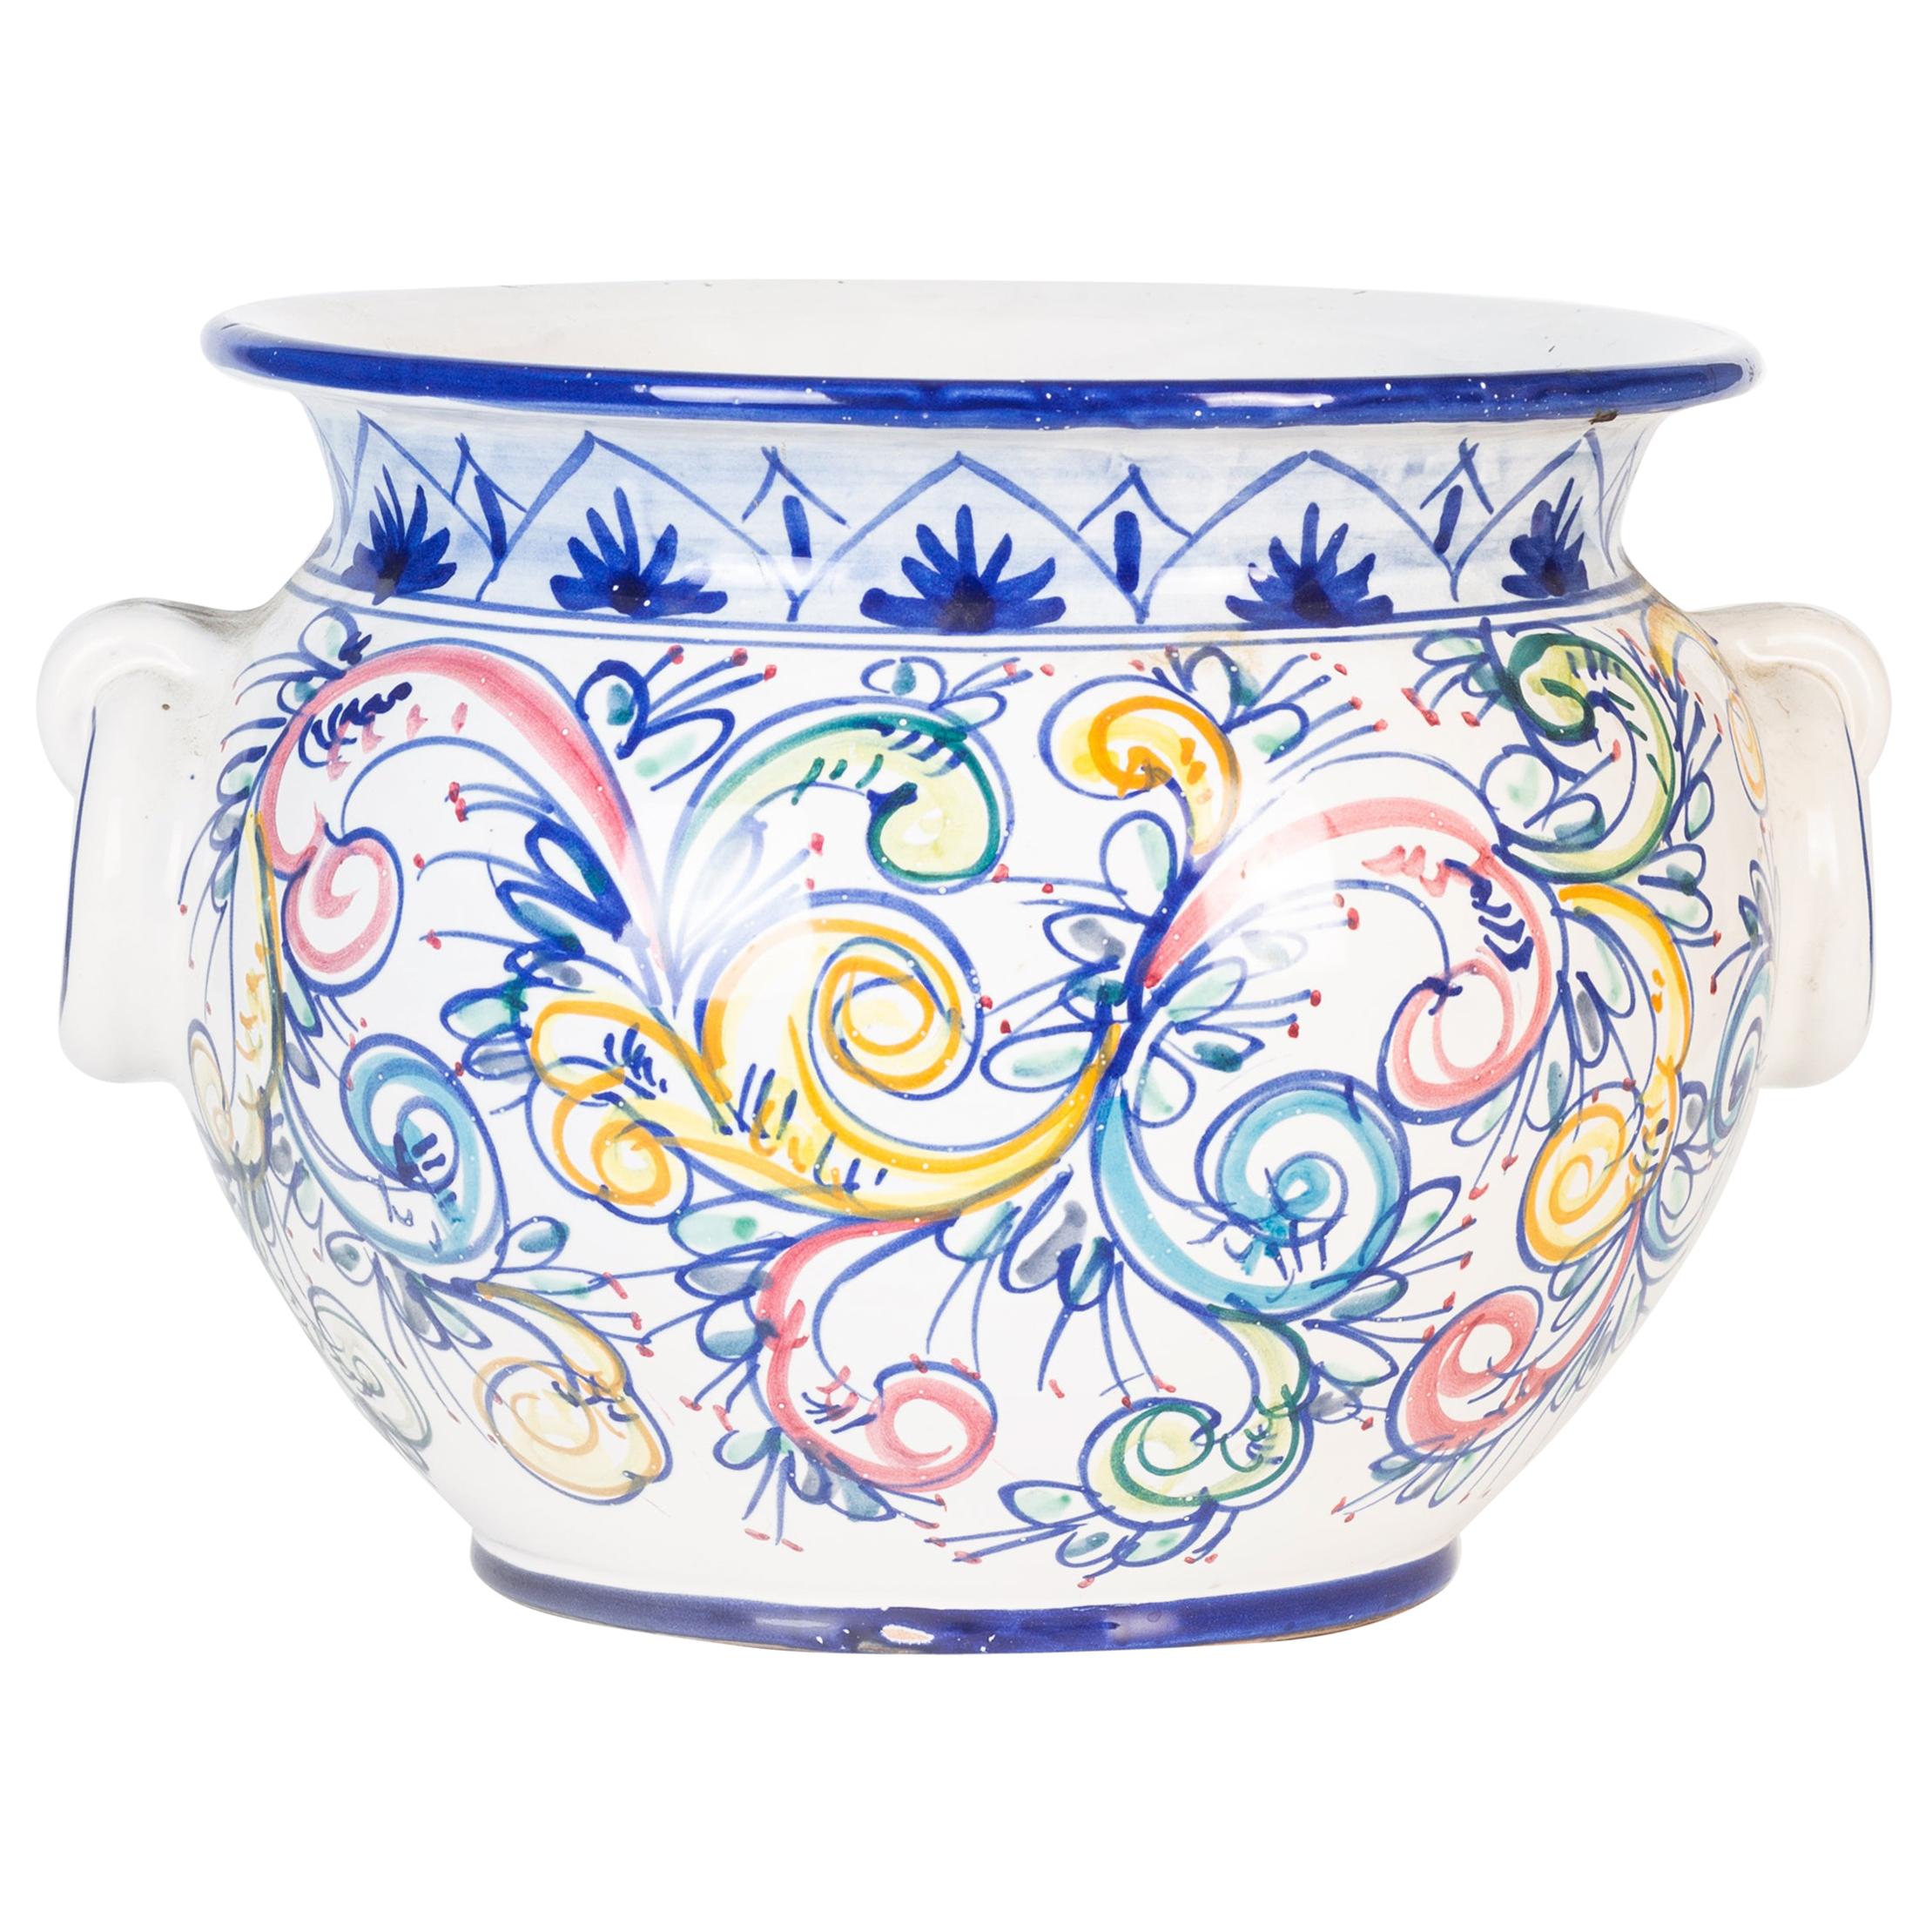 Vintage Ceramic Cachepot by Cer.Italia